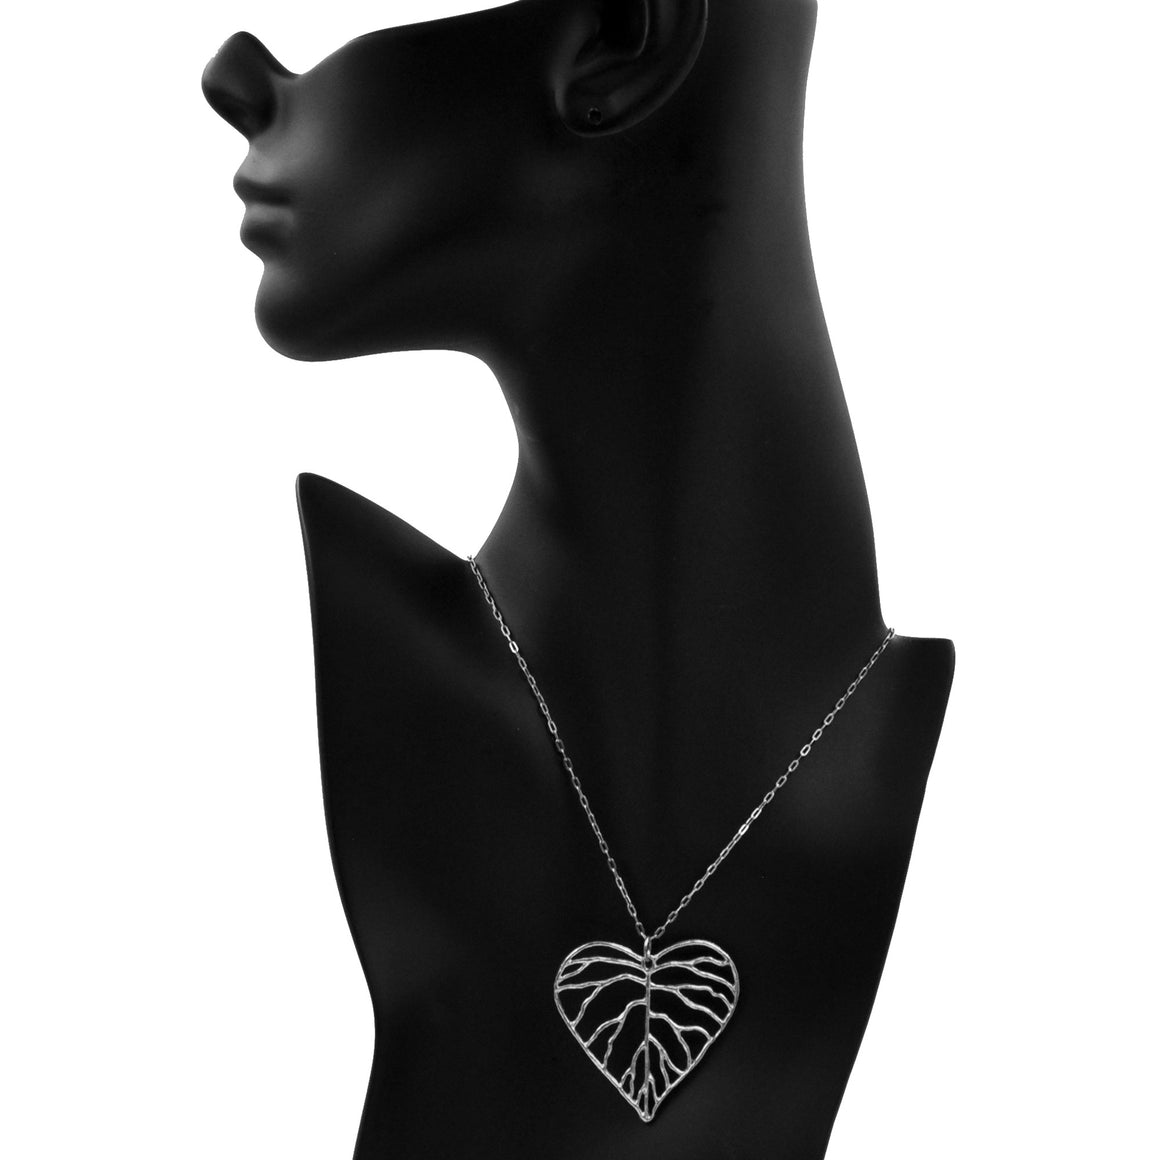 Heart Leaf Pendant - Platinum Silver